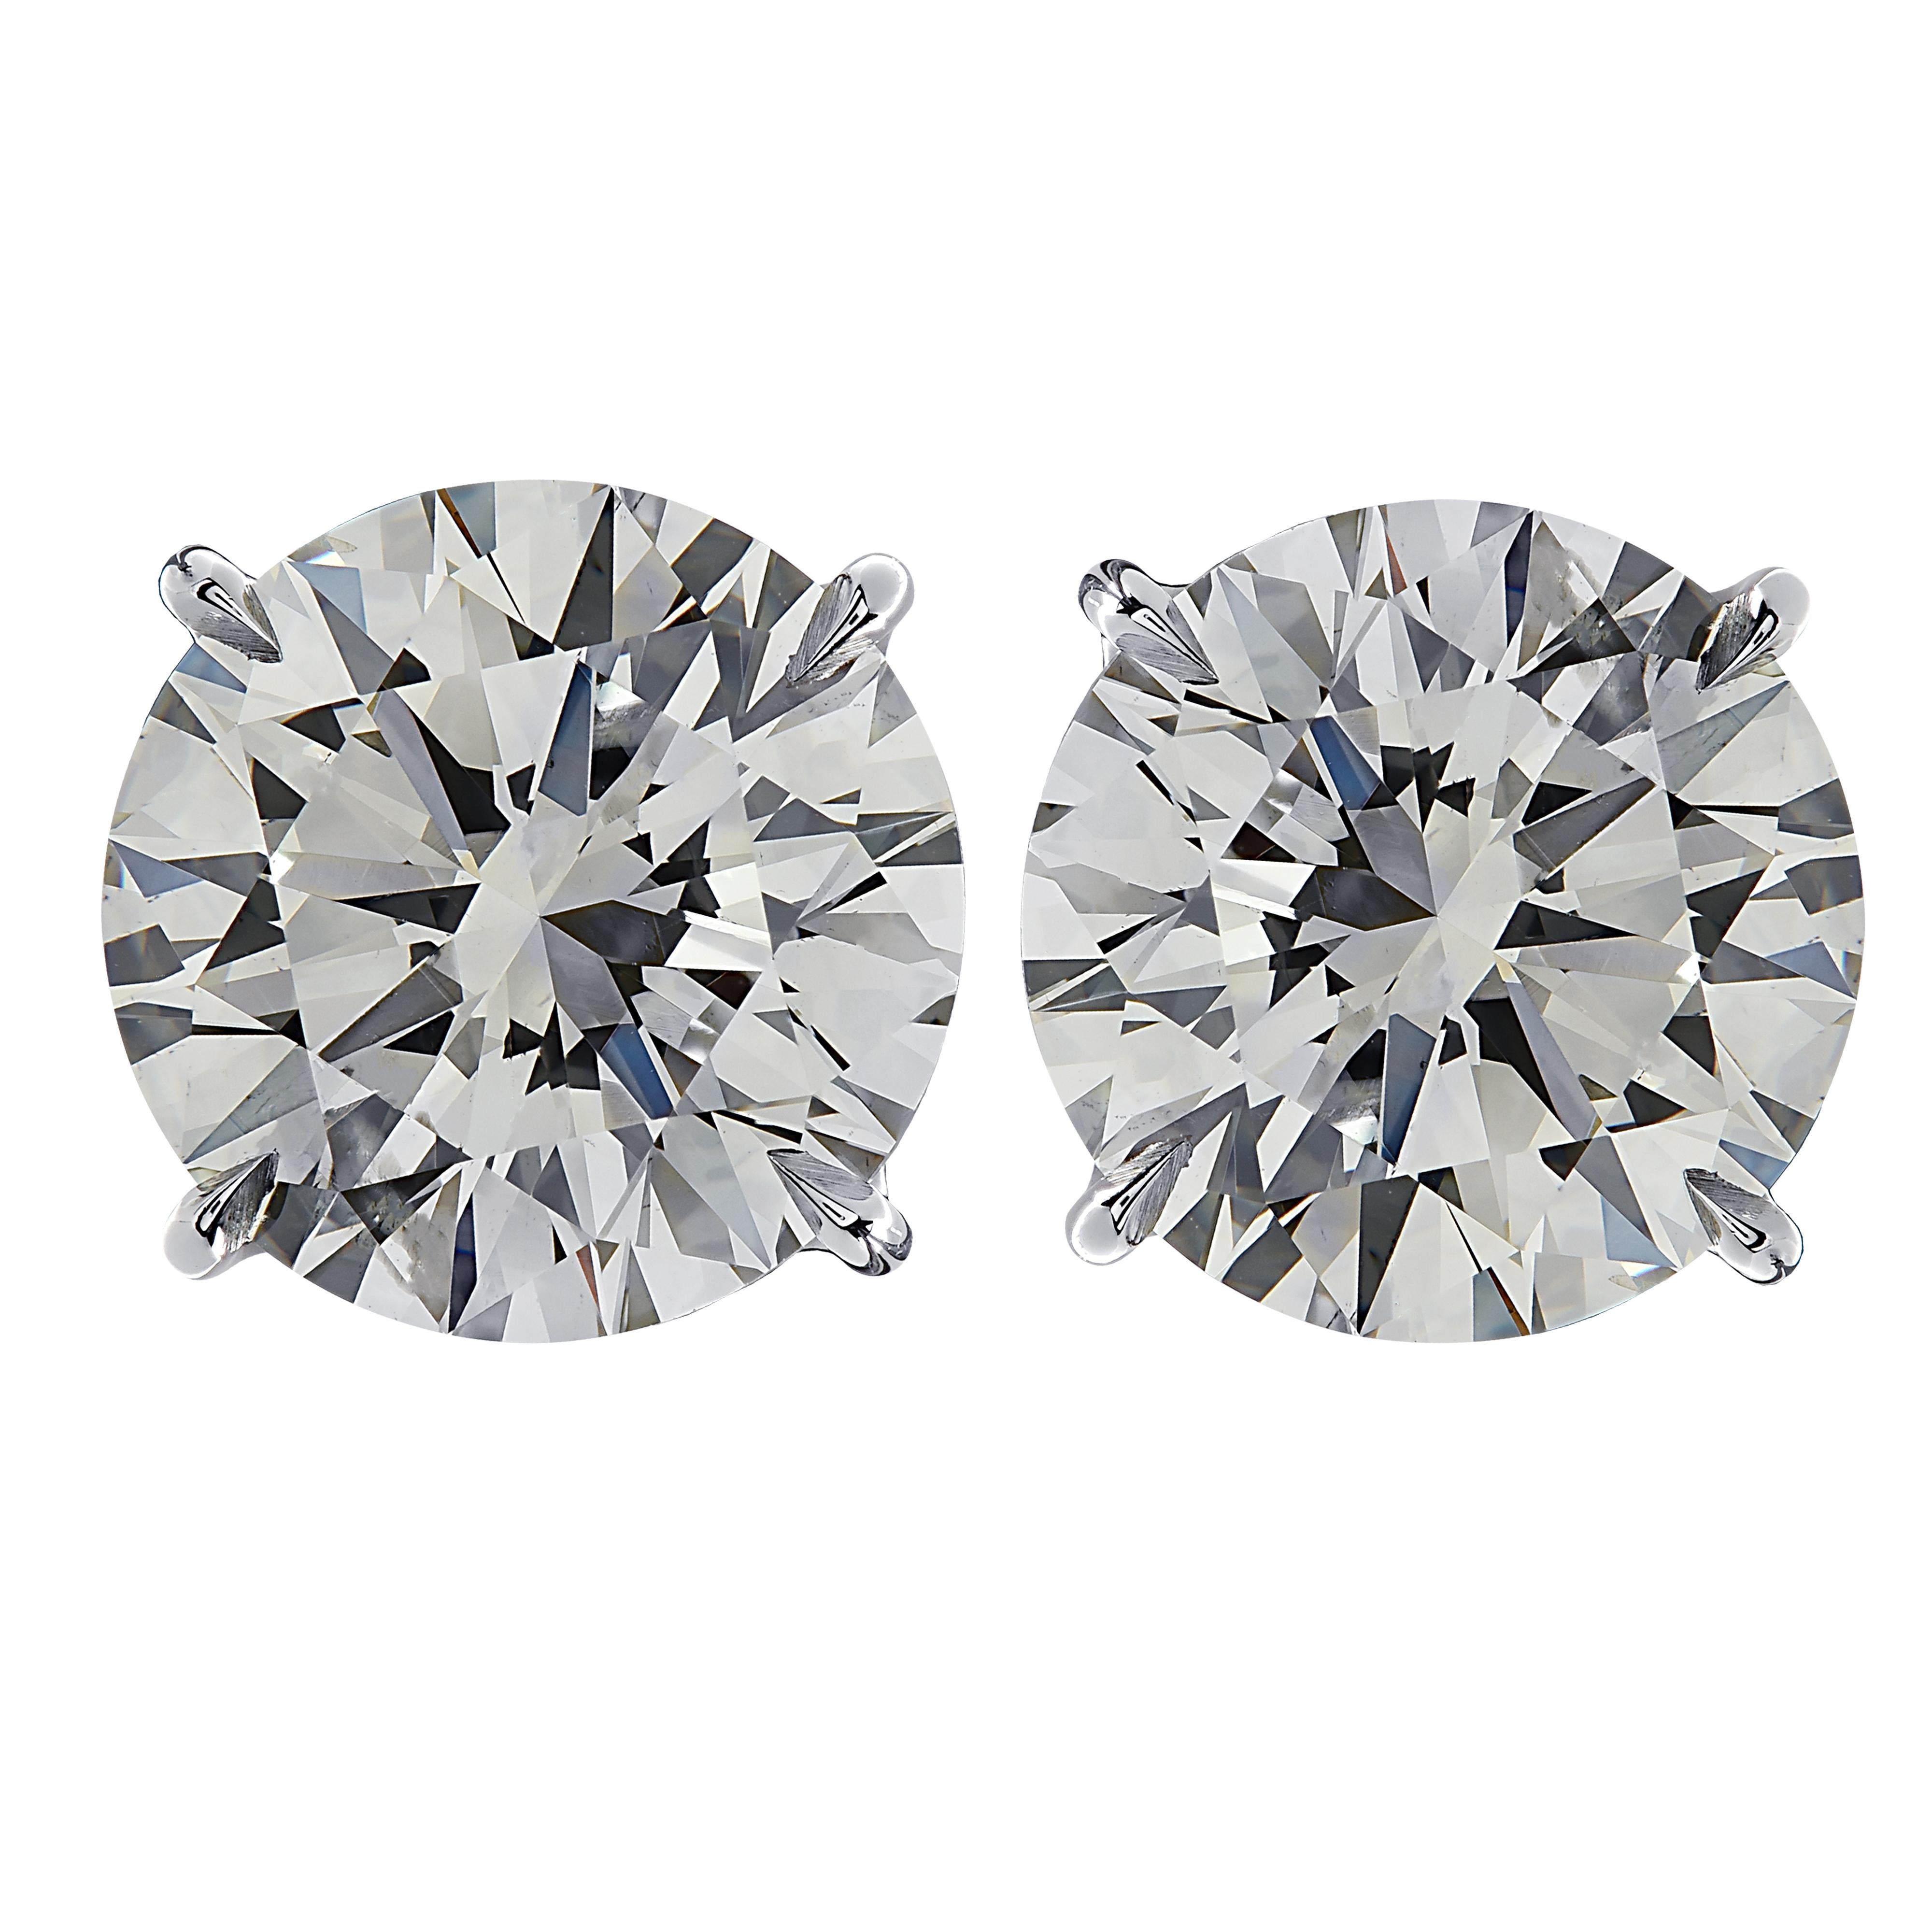 Round Cut Vivid Diamonds GIA Certified 4.02 Carat Diamond Stud Earrings